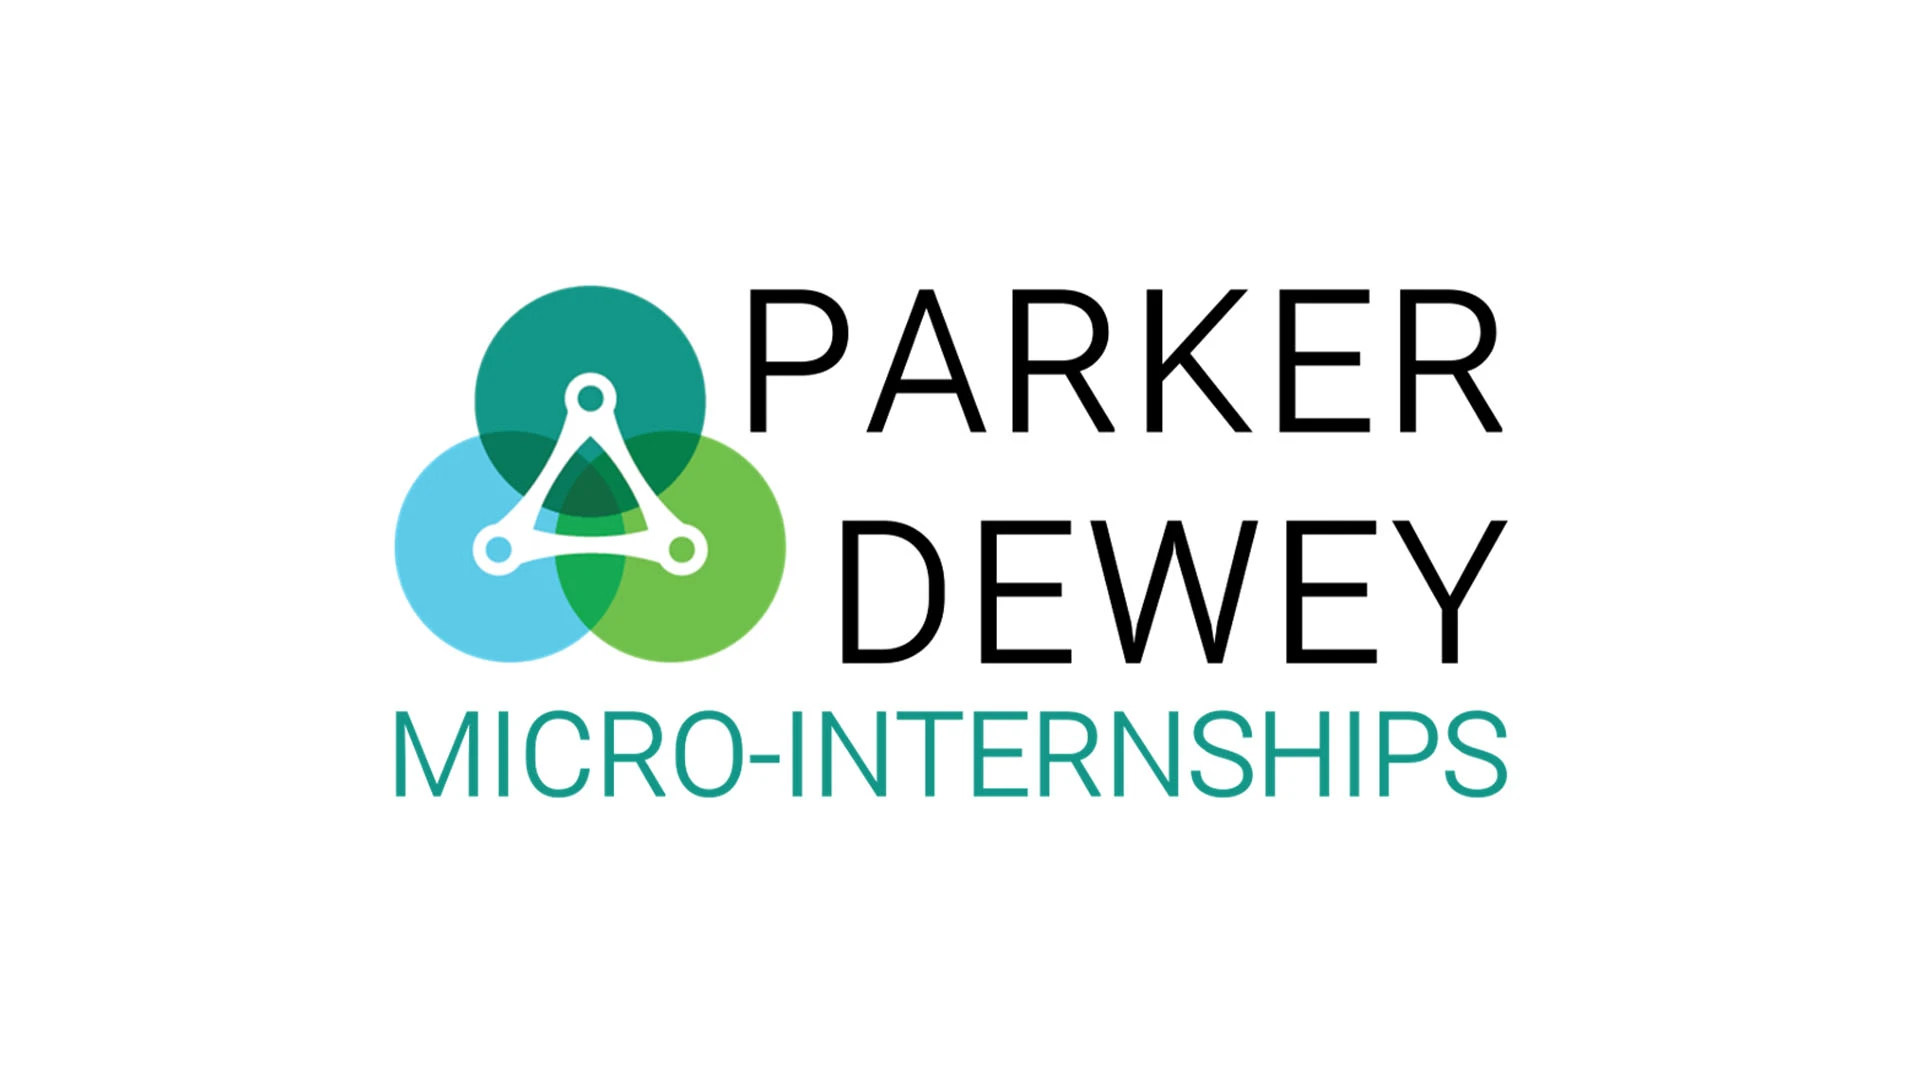 parker dewey micro-internships logo